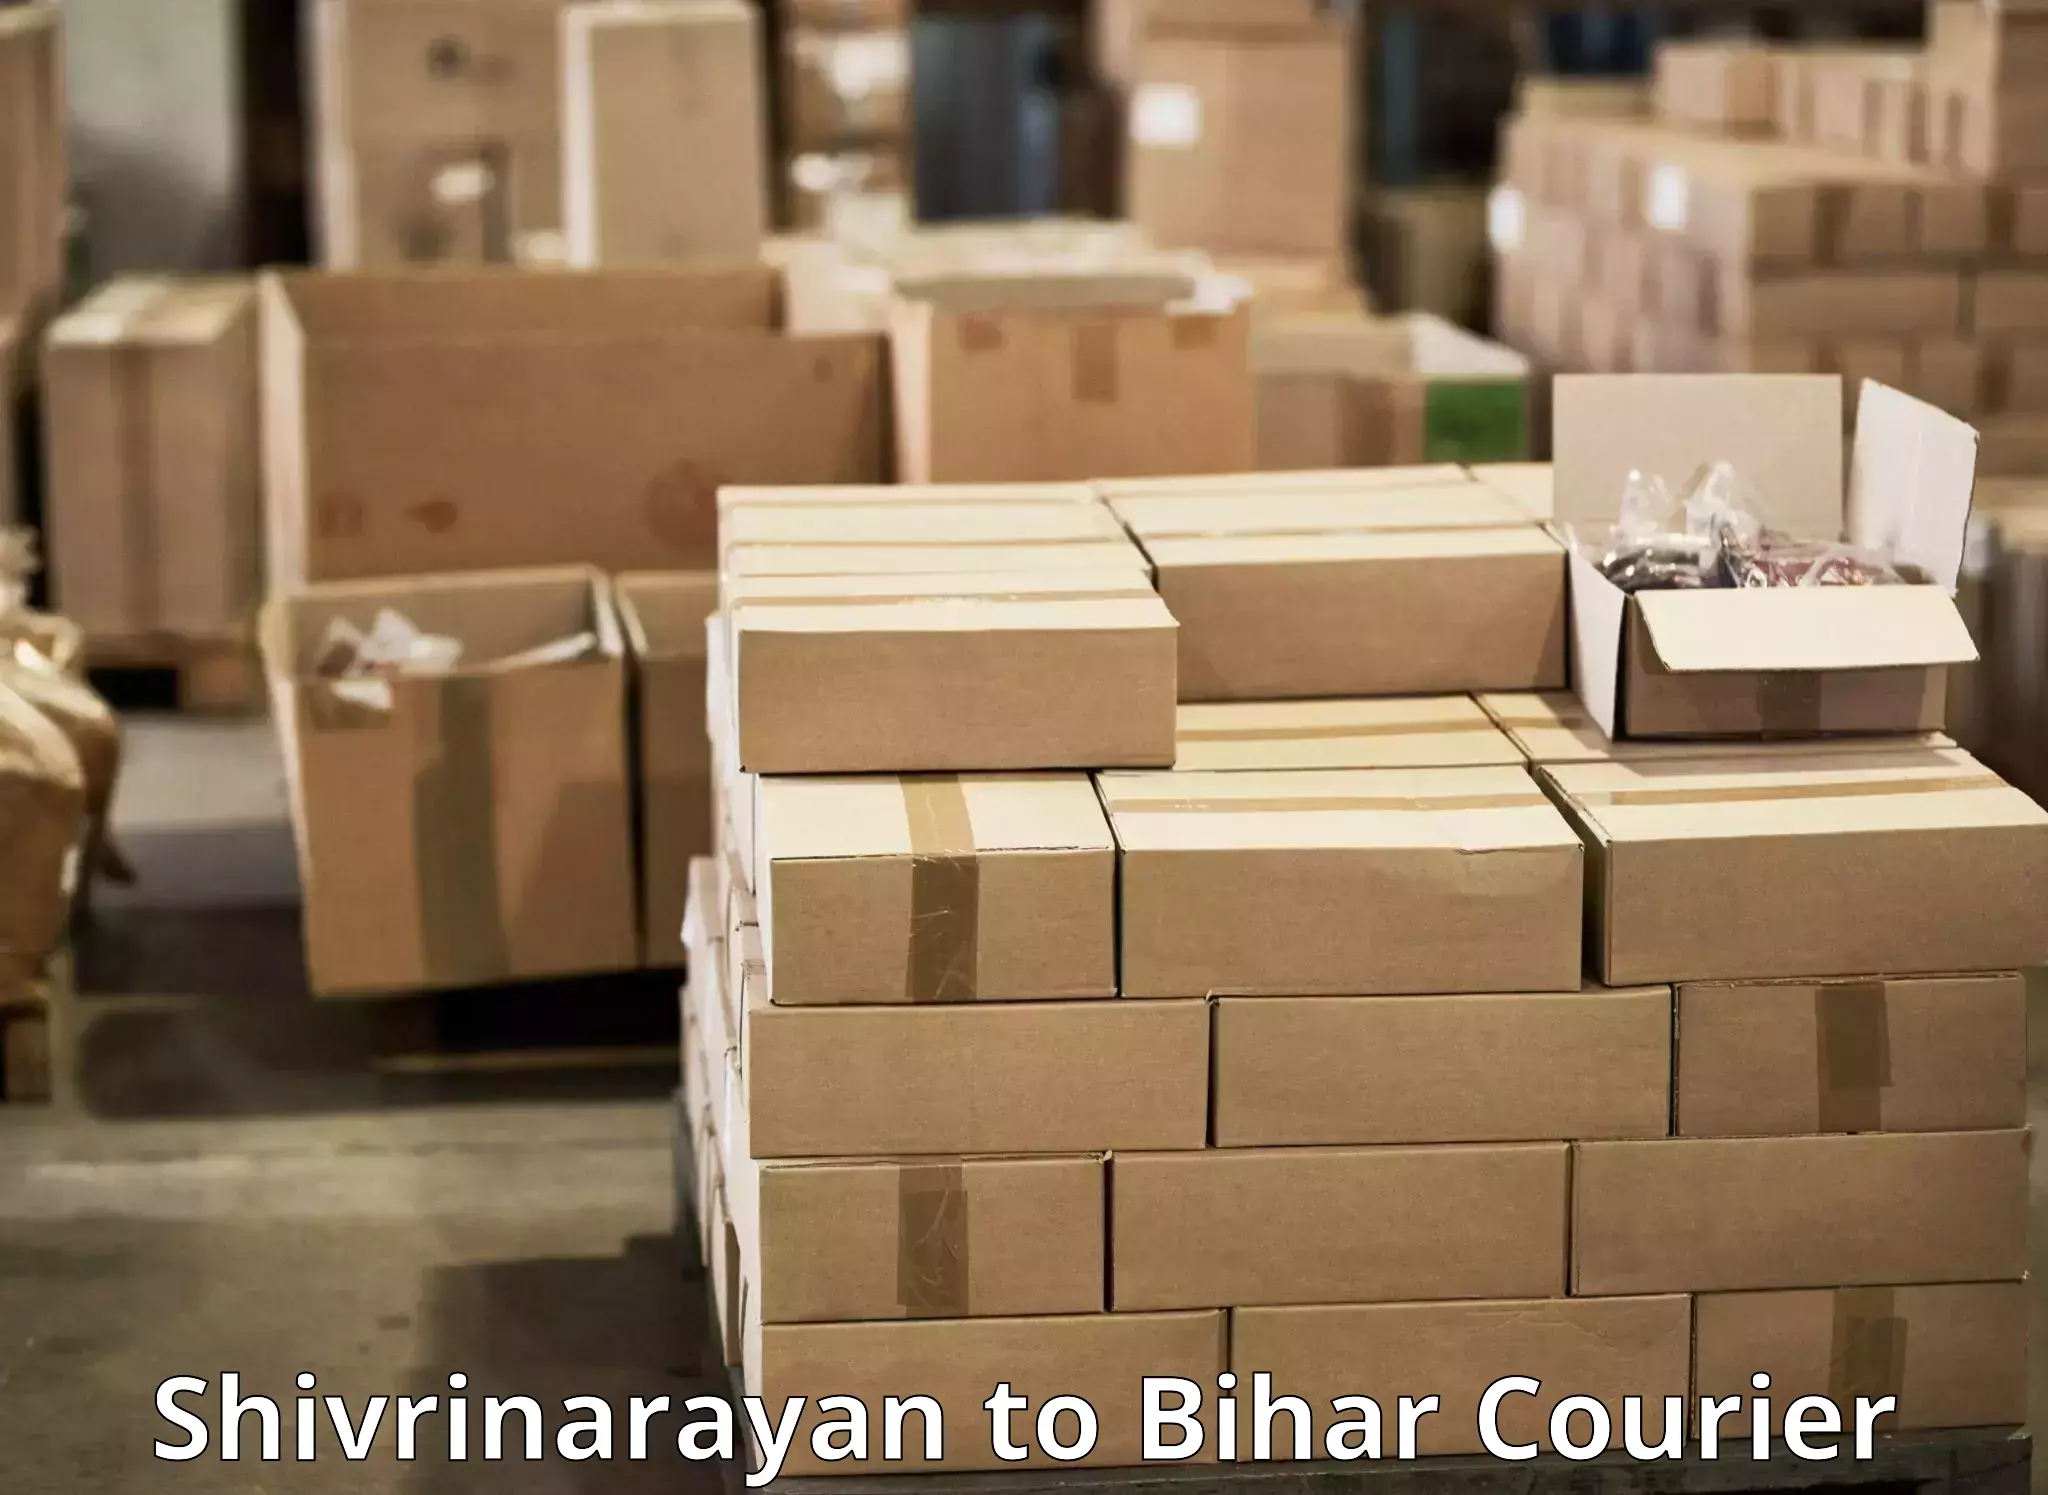 Courier service innovation Shivrinarayan to Dhaka